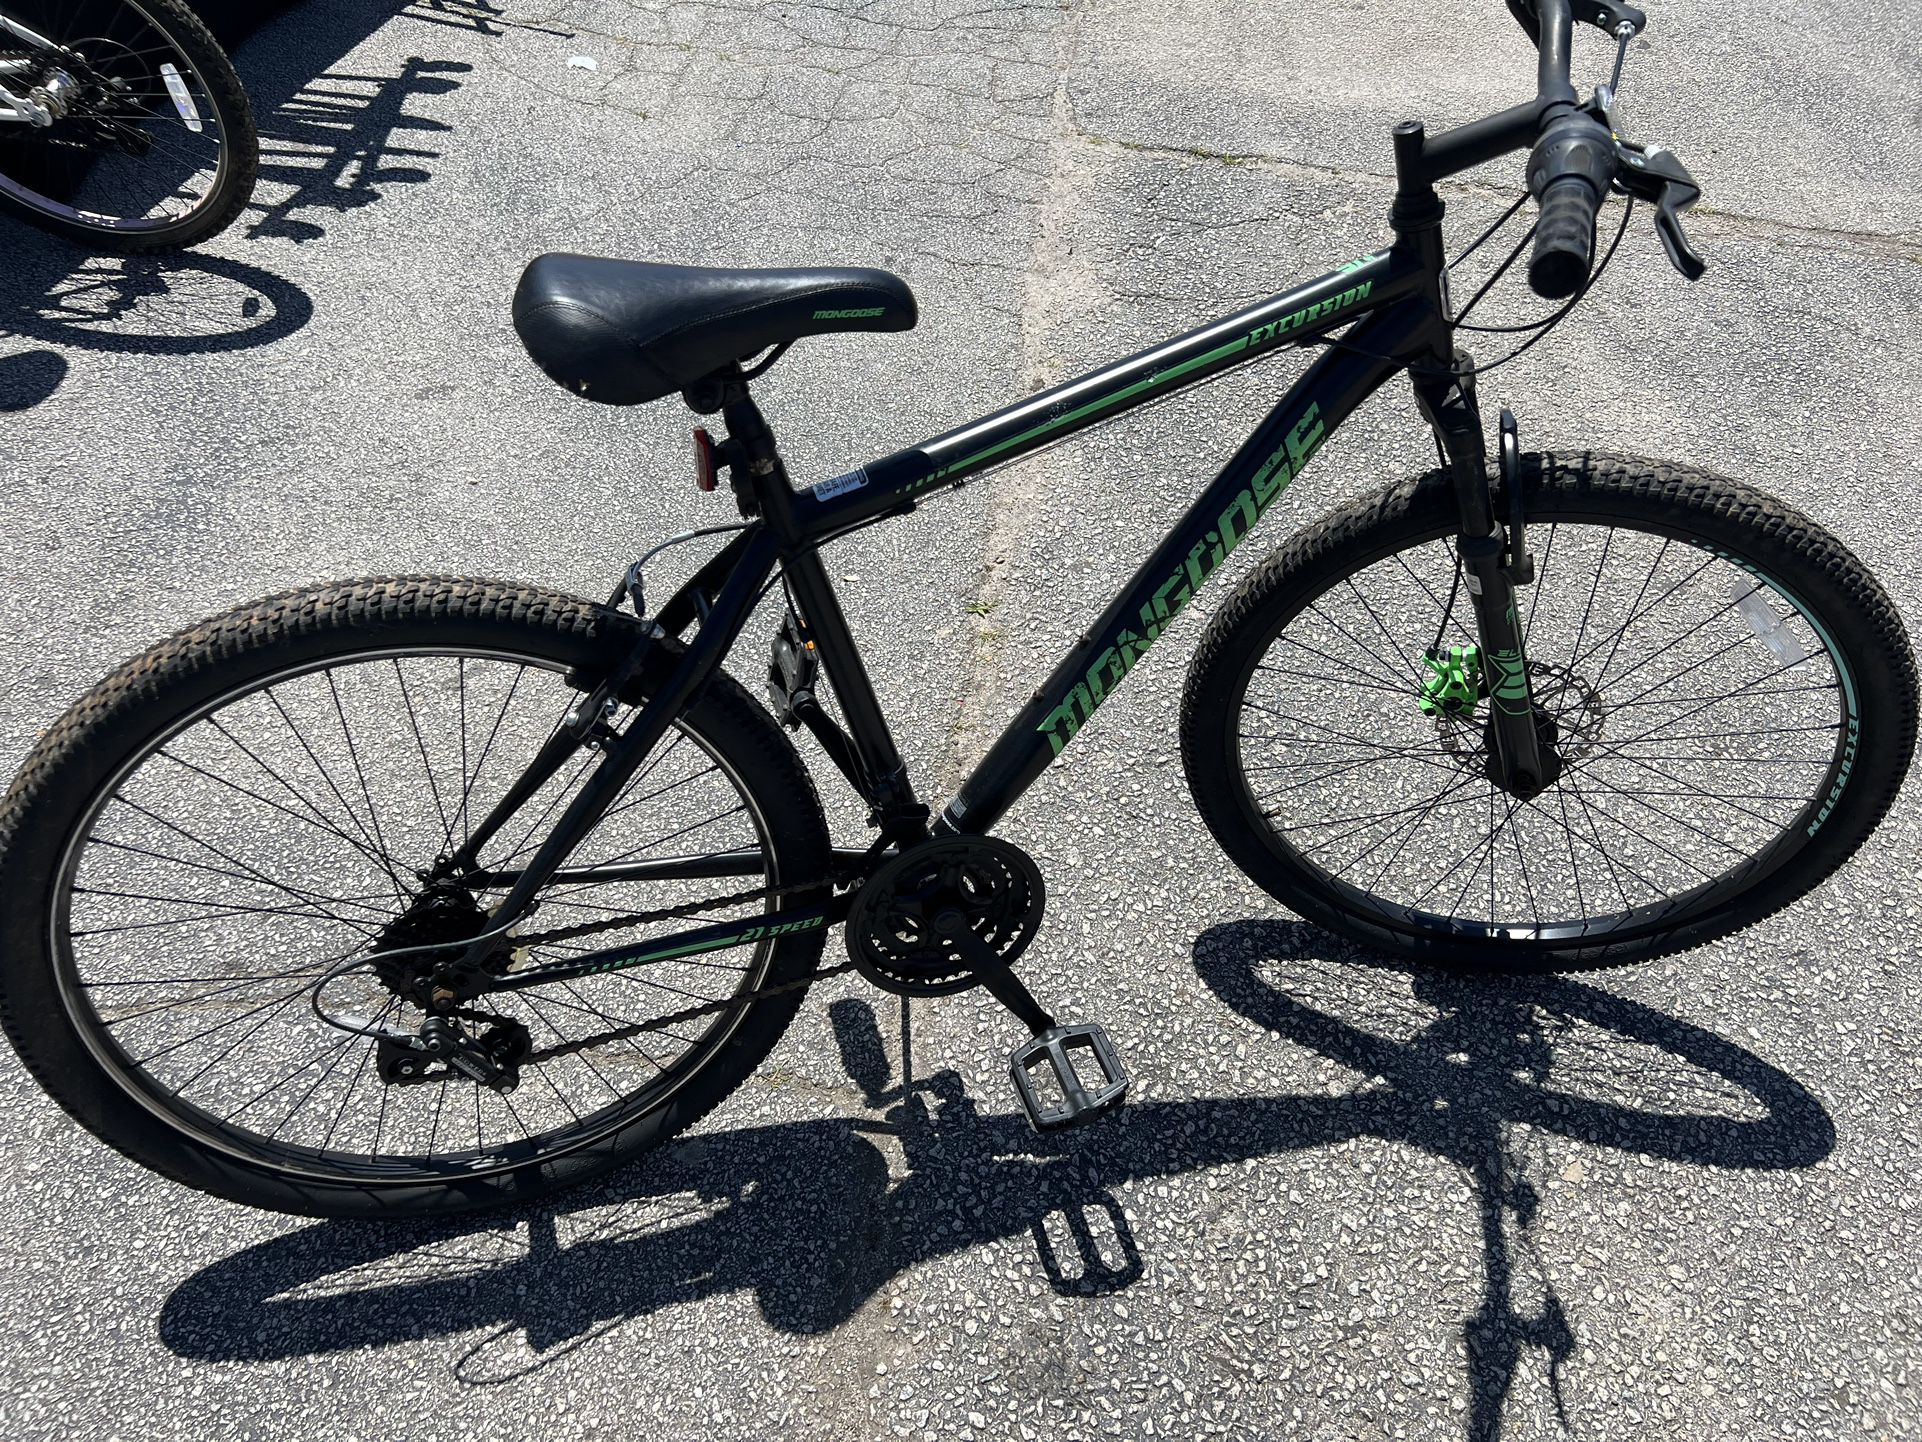 Mongoose Excursion mountain bike, 26 inch wheel, 21 speeds, mens frame, black / green